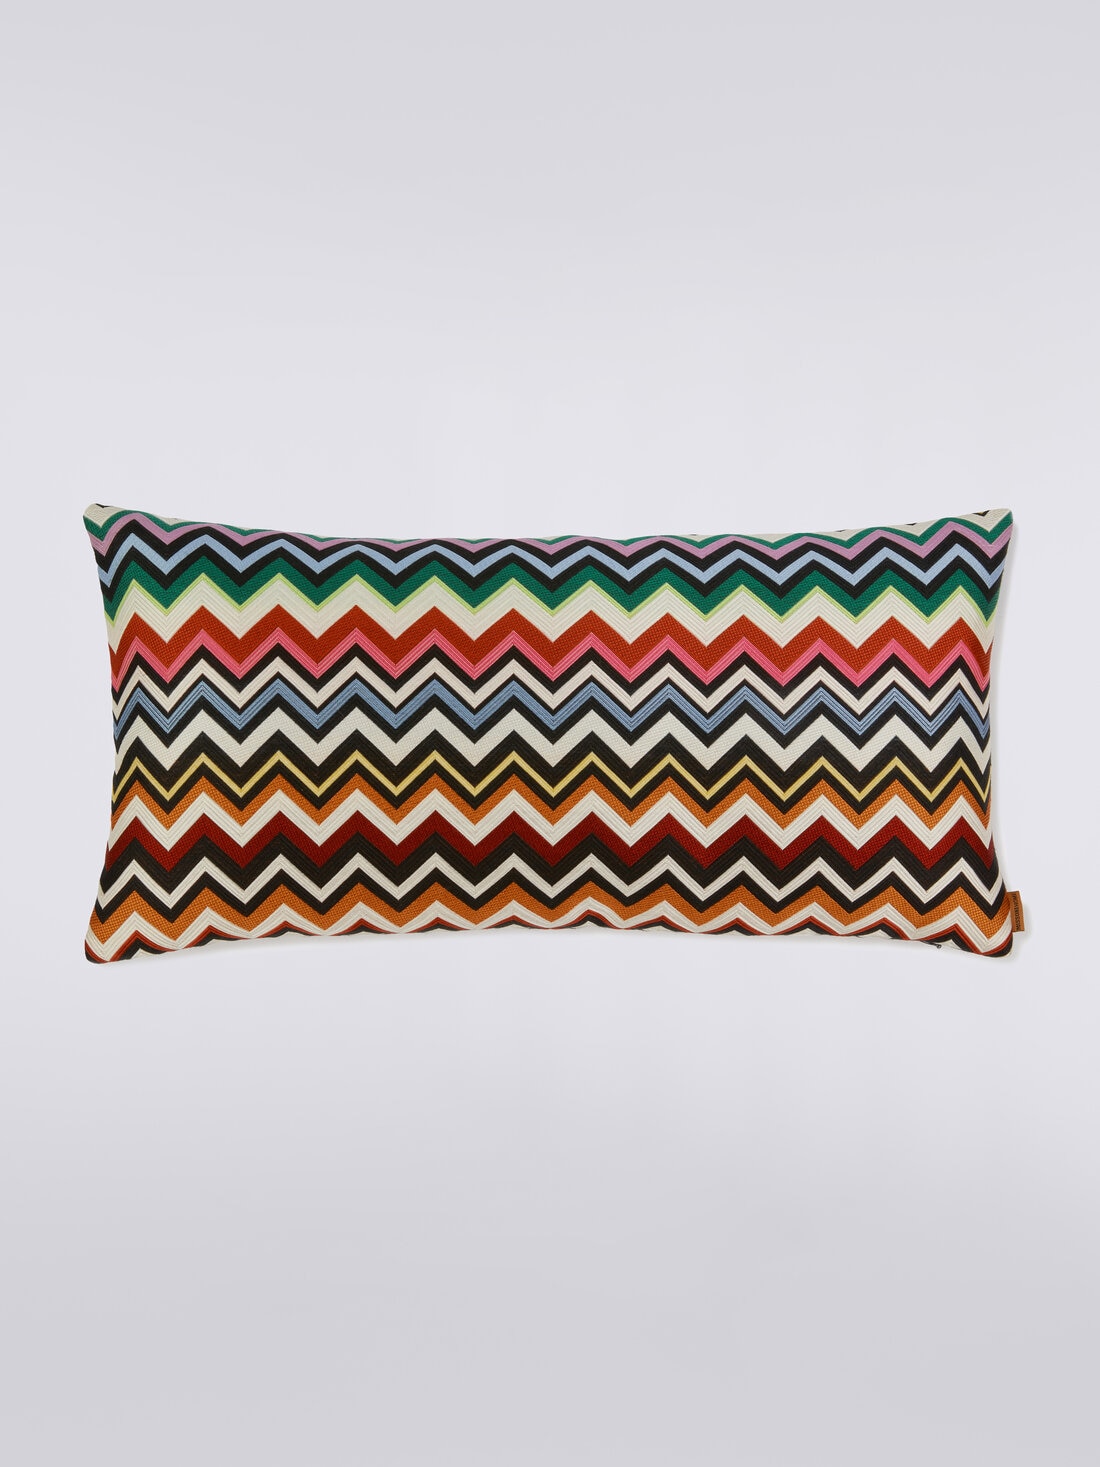 Belfast cushion 30x60 cm, Multicoloured  - 8051275608424 - 0